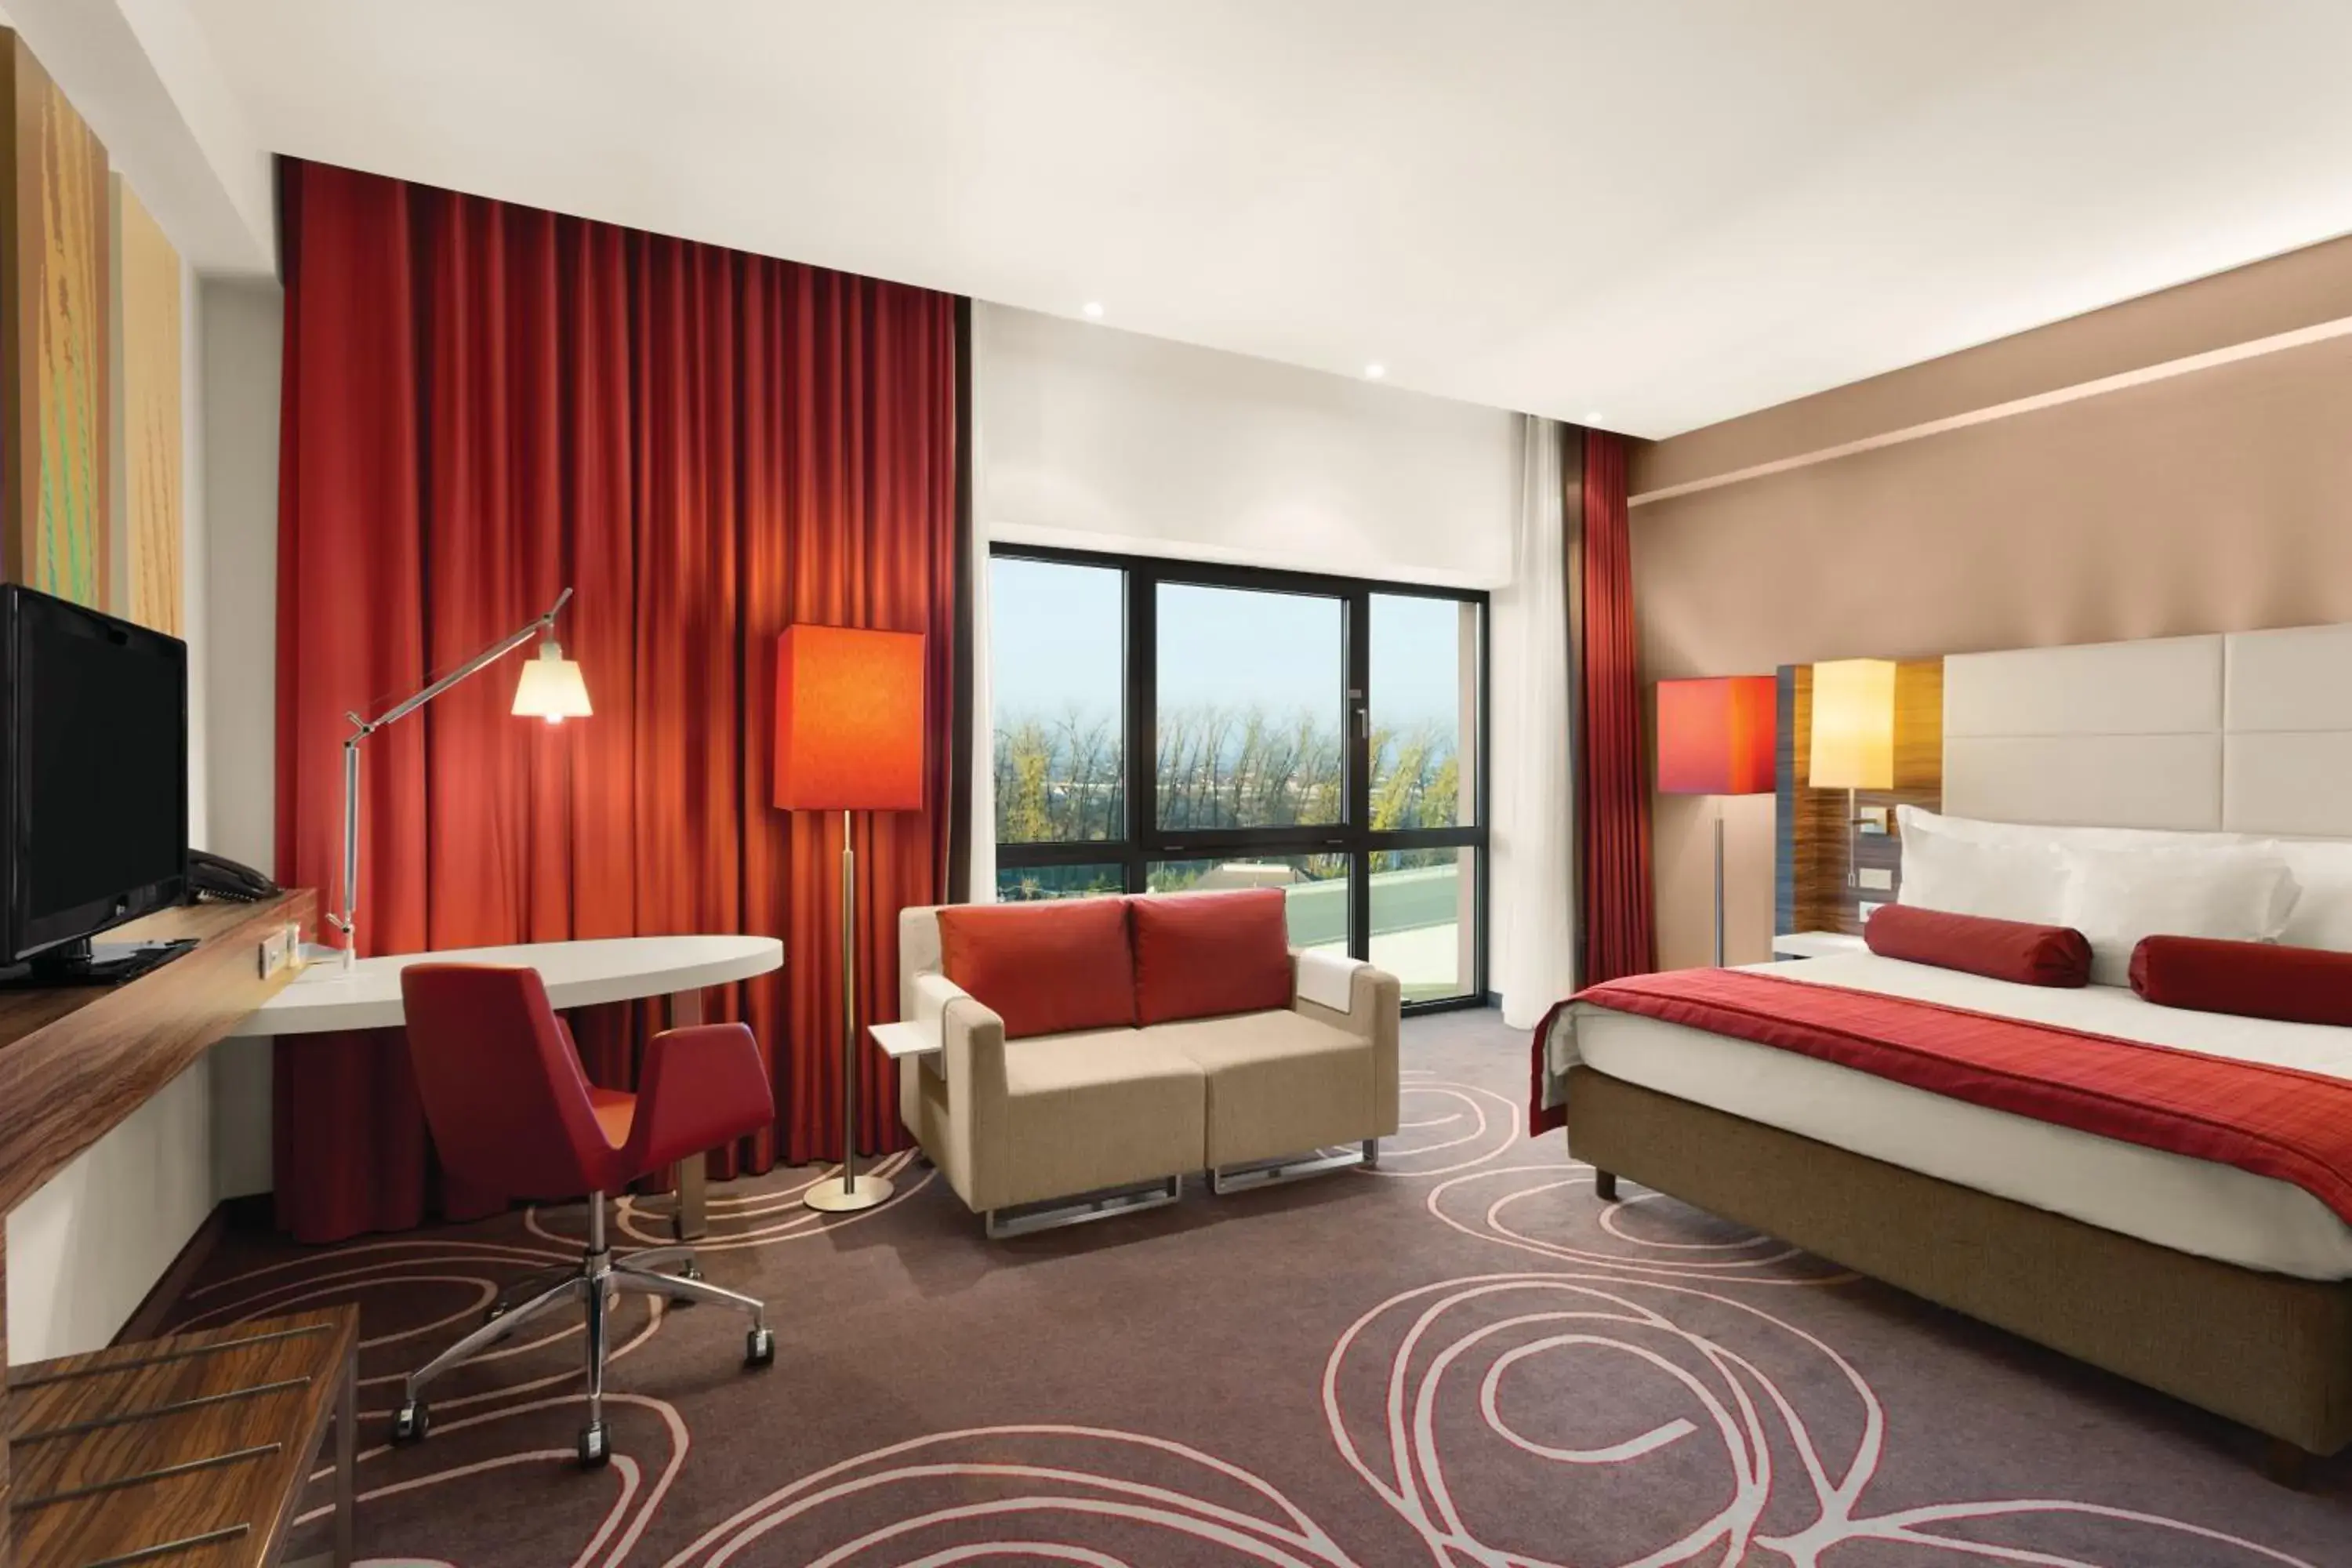 Bed, Room Photo in Hotel Ramada Pitesti